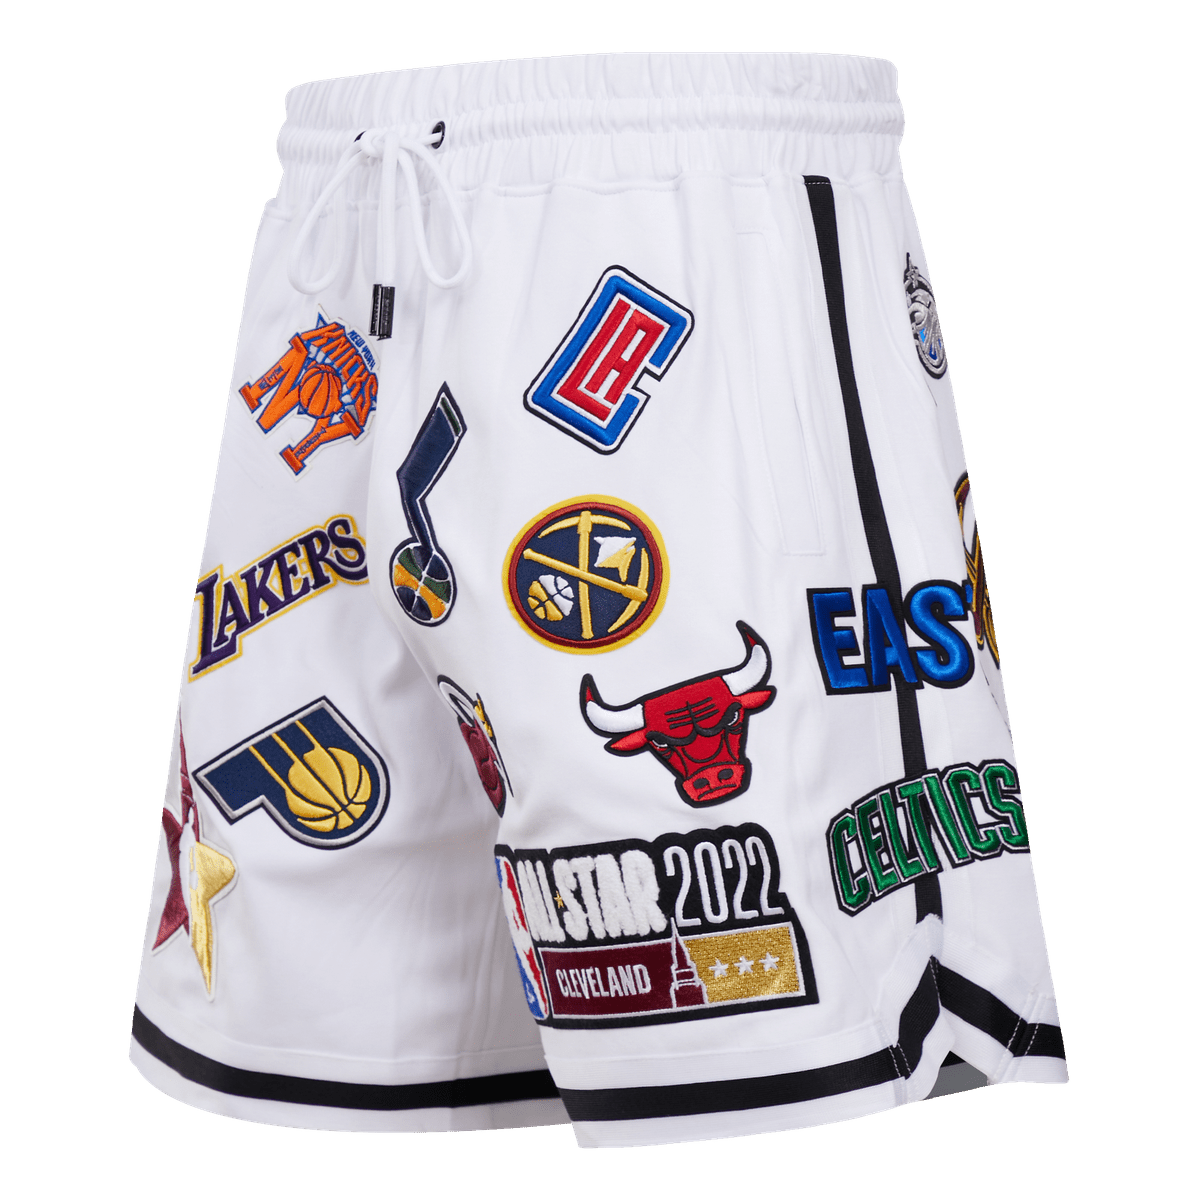 Pro Max - 2022 NBA All-Star shorts set (white) – Major Key